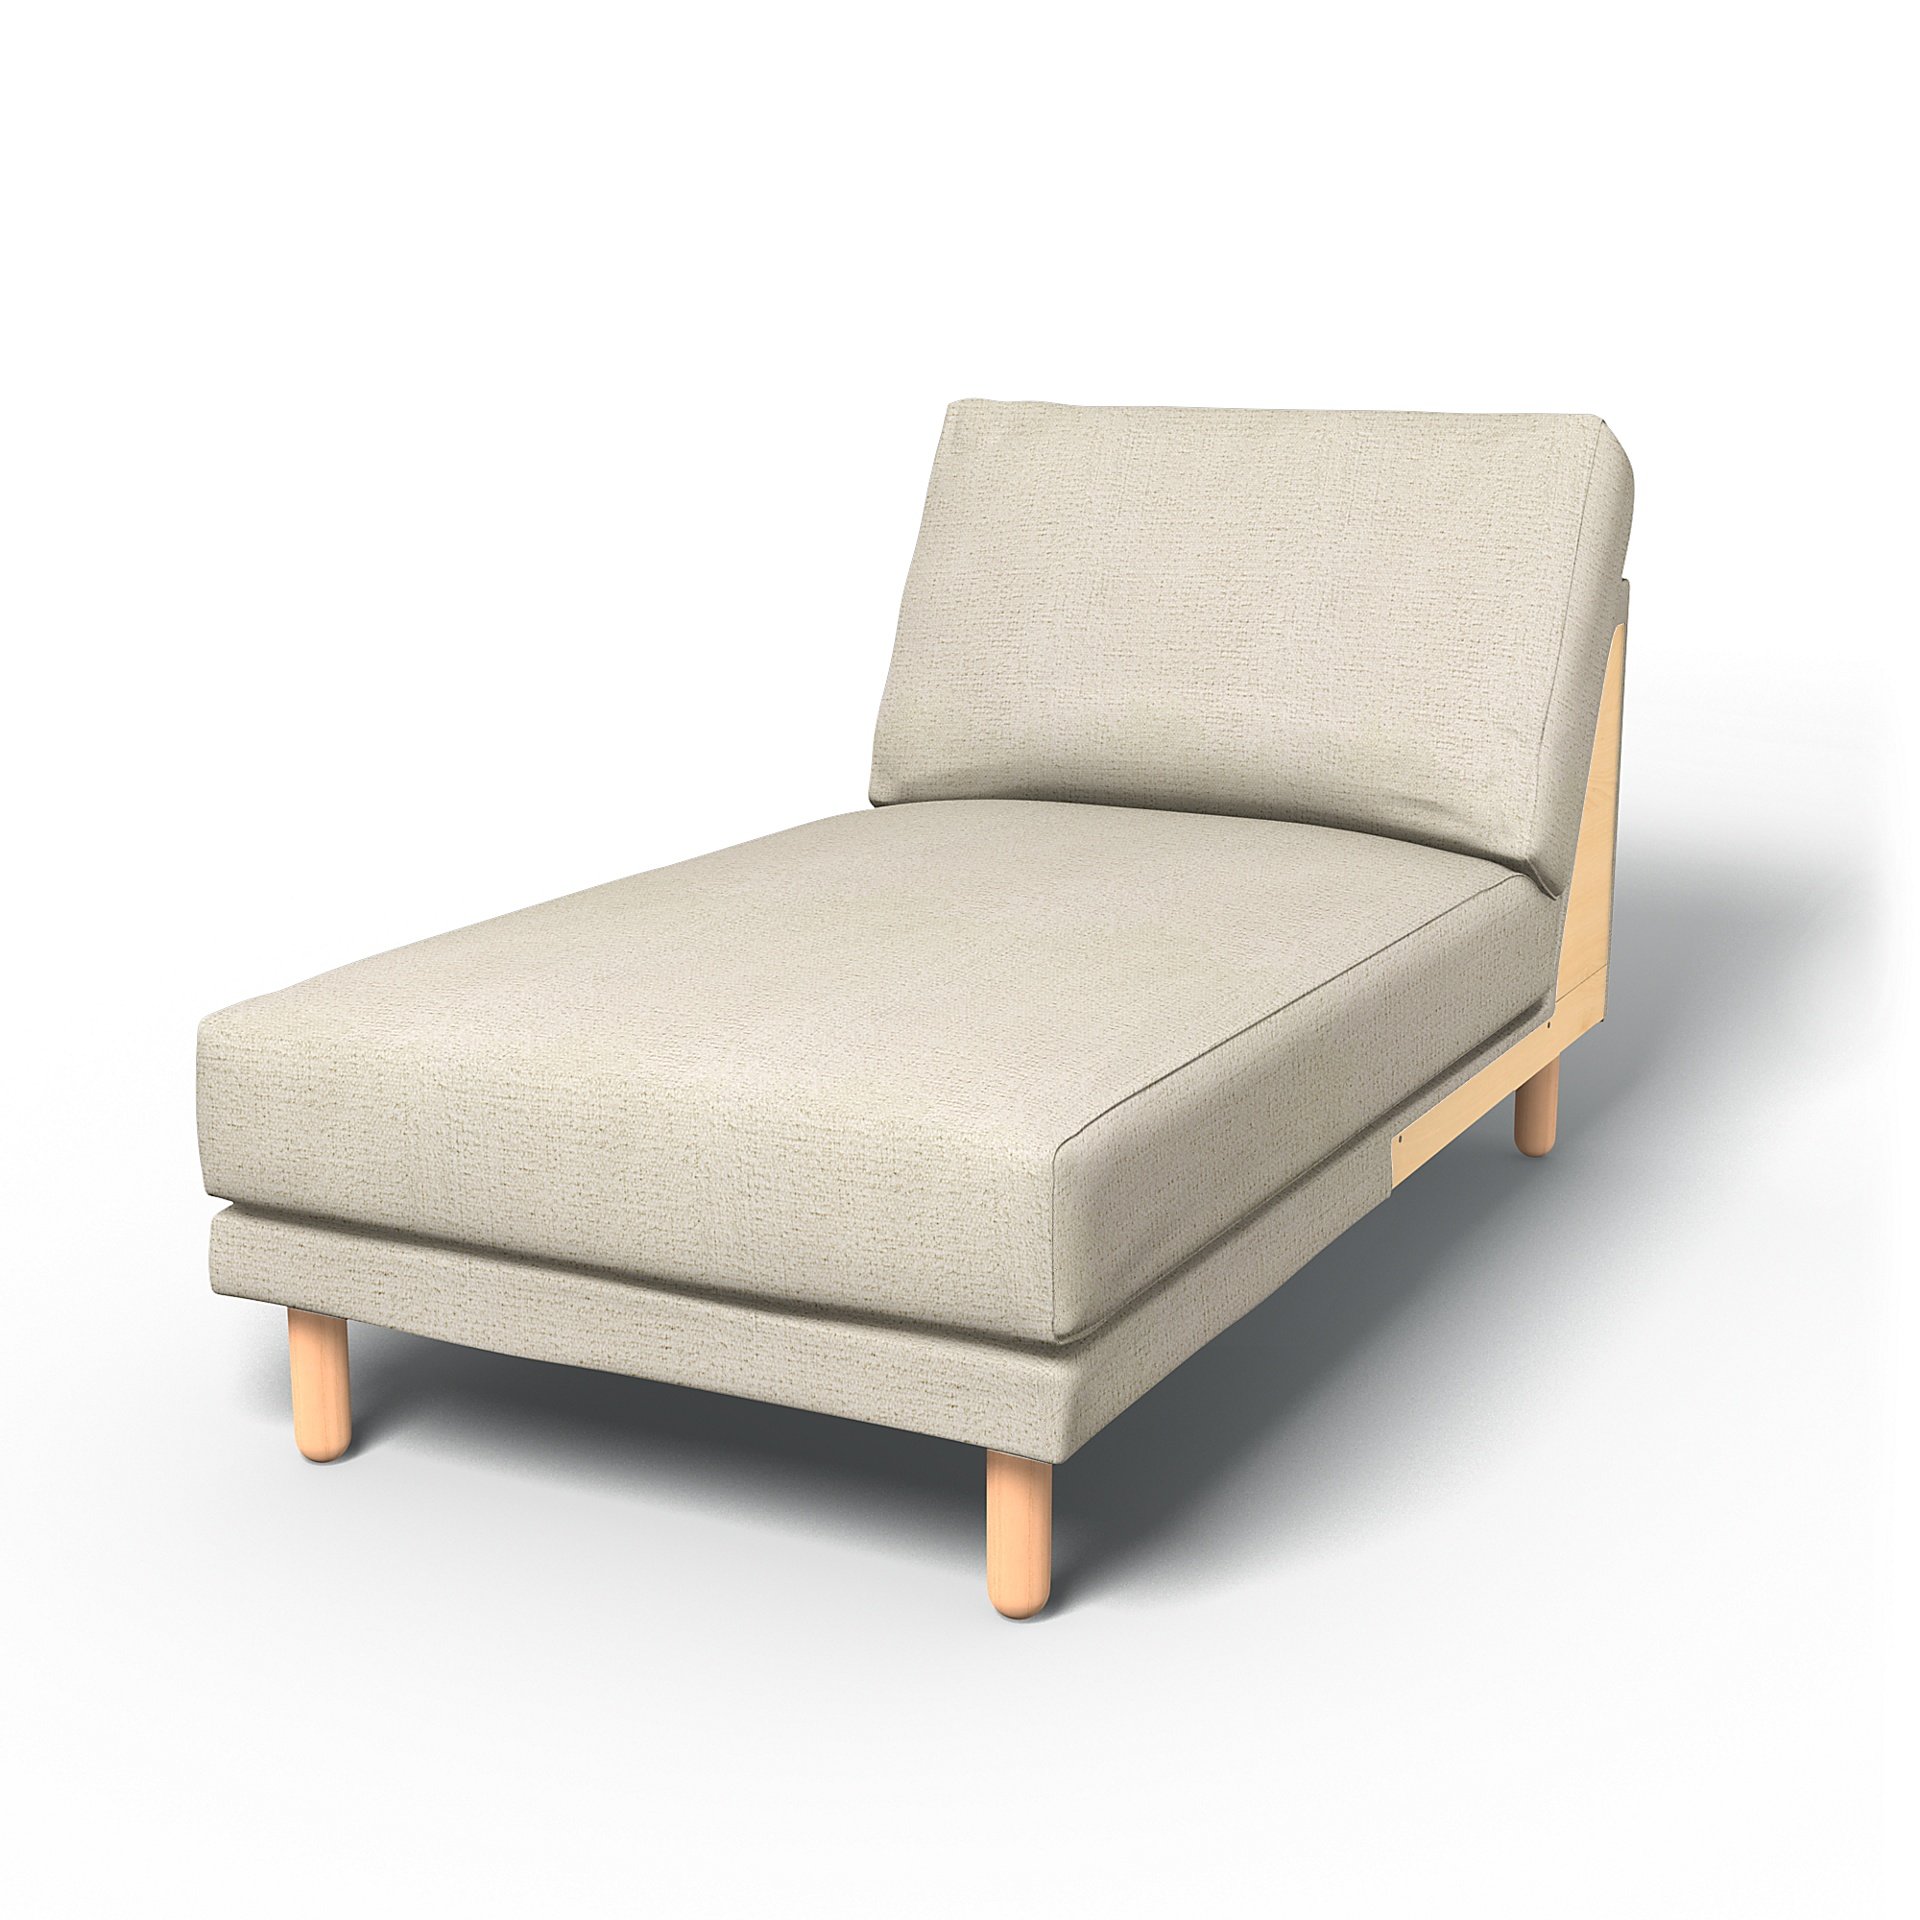 IKEA - Norsborg Chaise Longue Add-on Unit Cover, Ecru, Boucle & Texture - Bemz